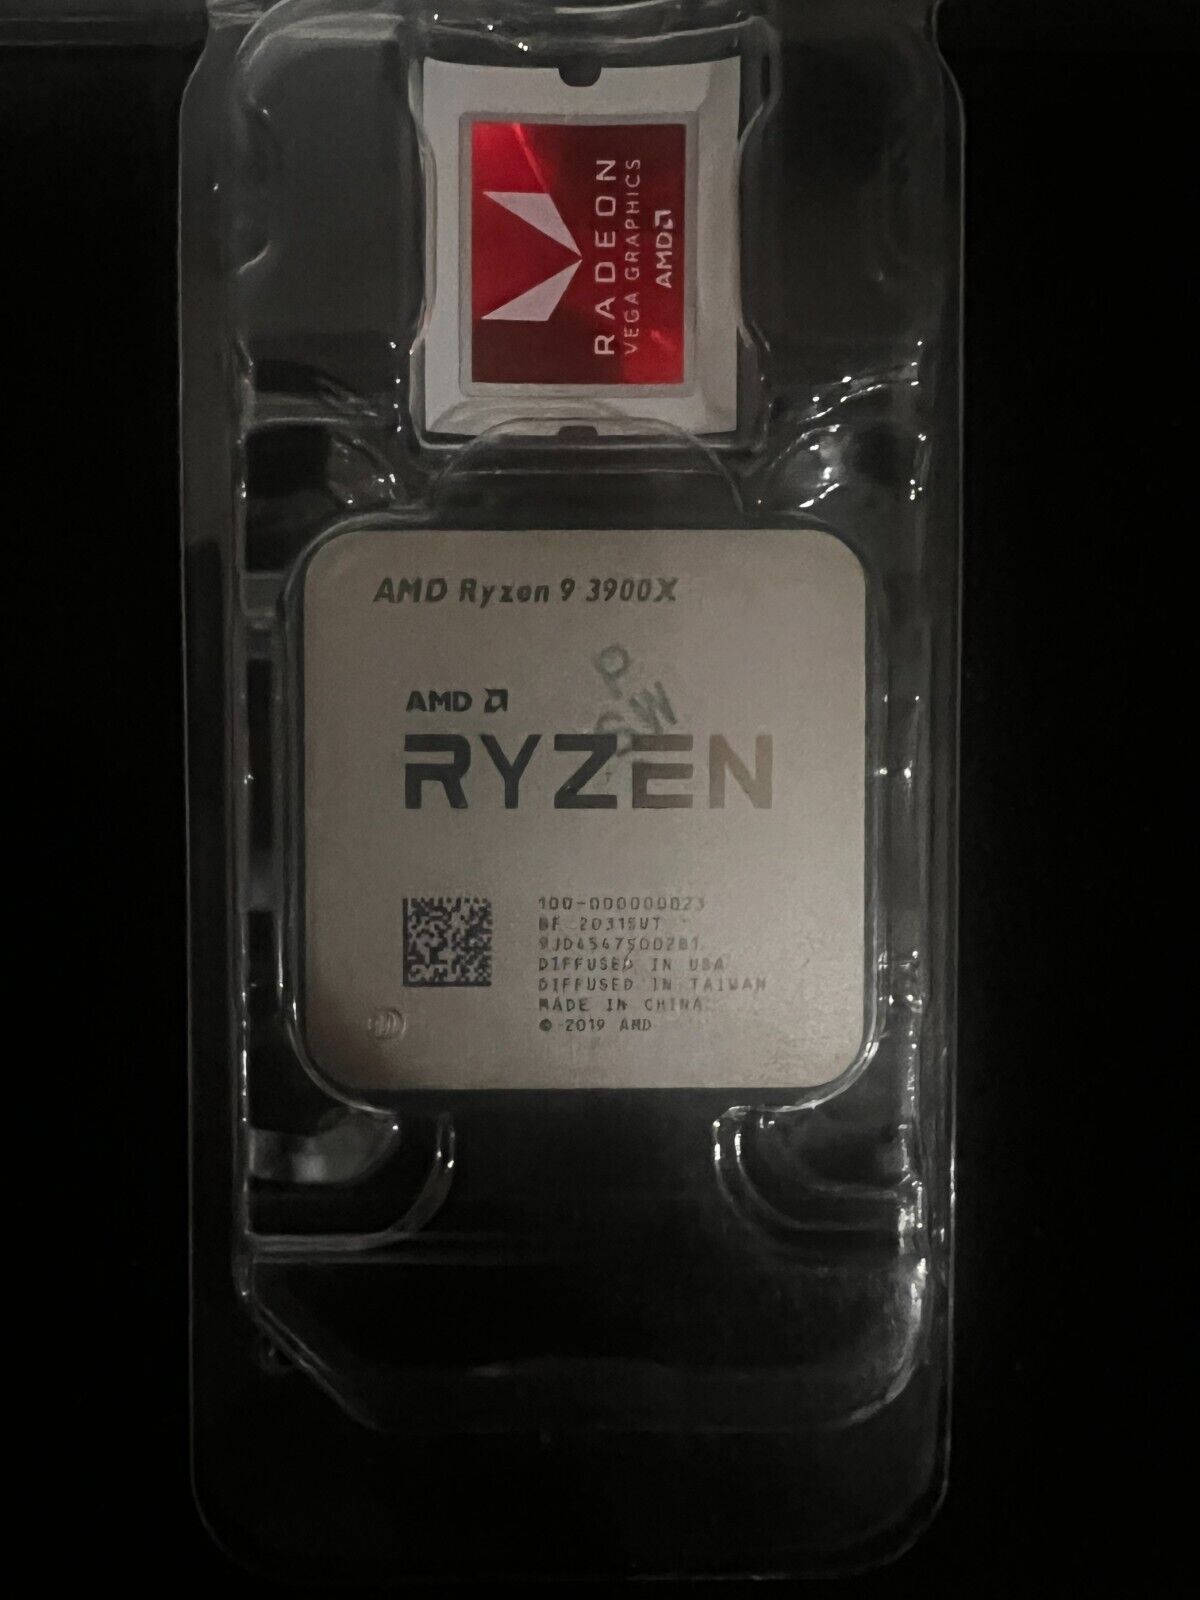 Ryzen 9 3900X *BRAND NEW* (OPEN BOX) - 12 Cores 24 Threads AMD AM4